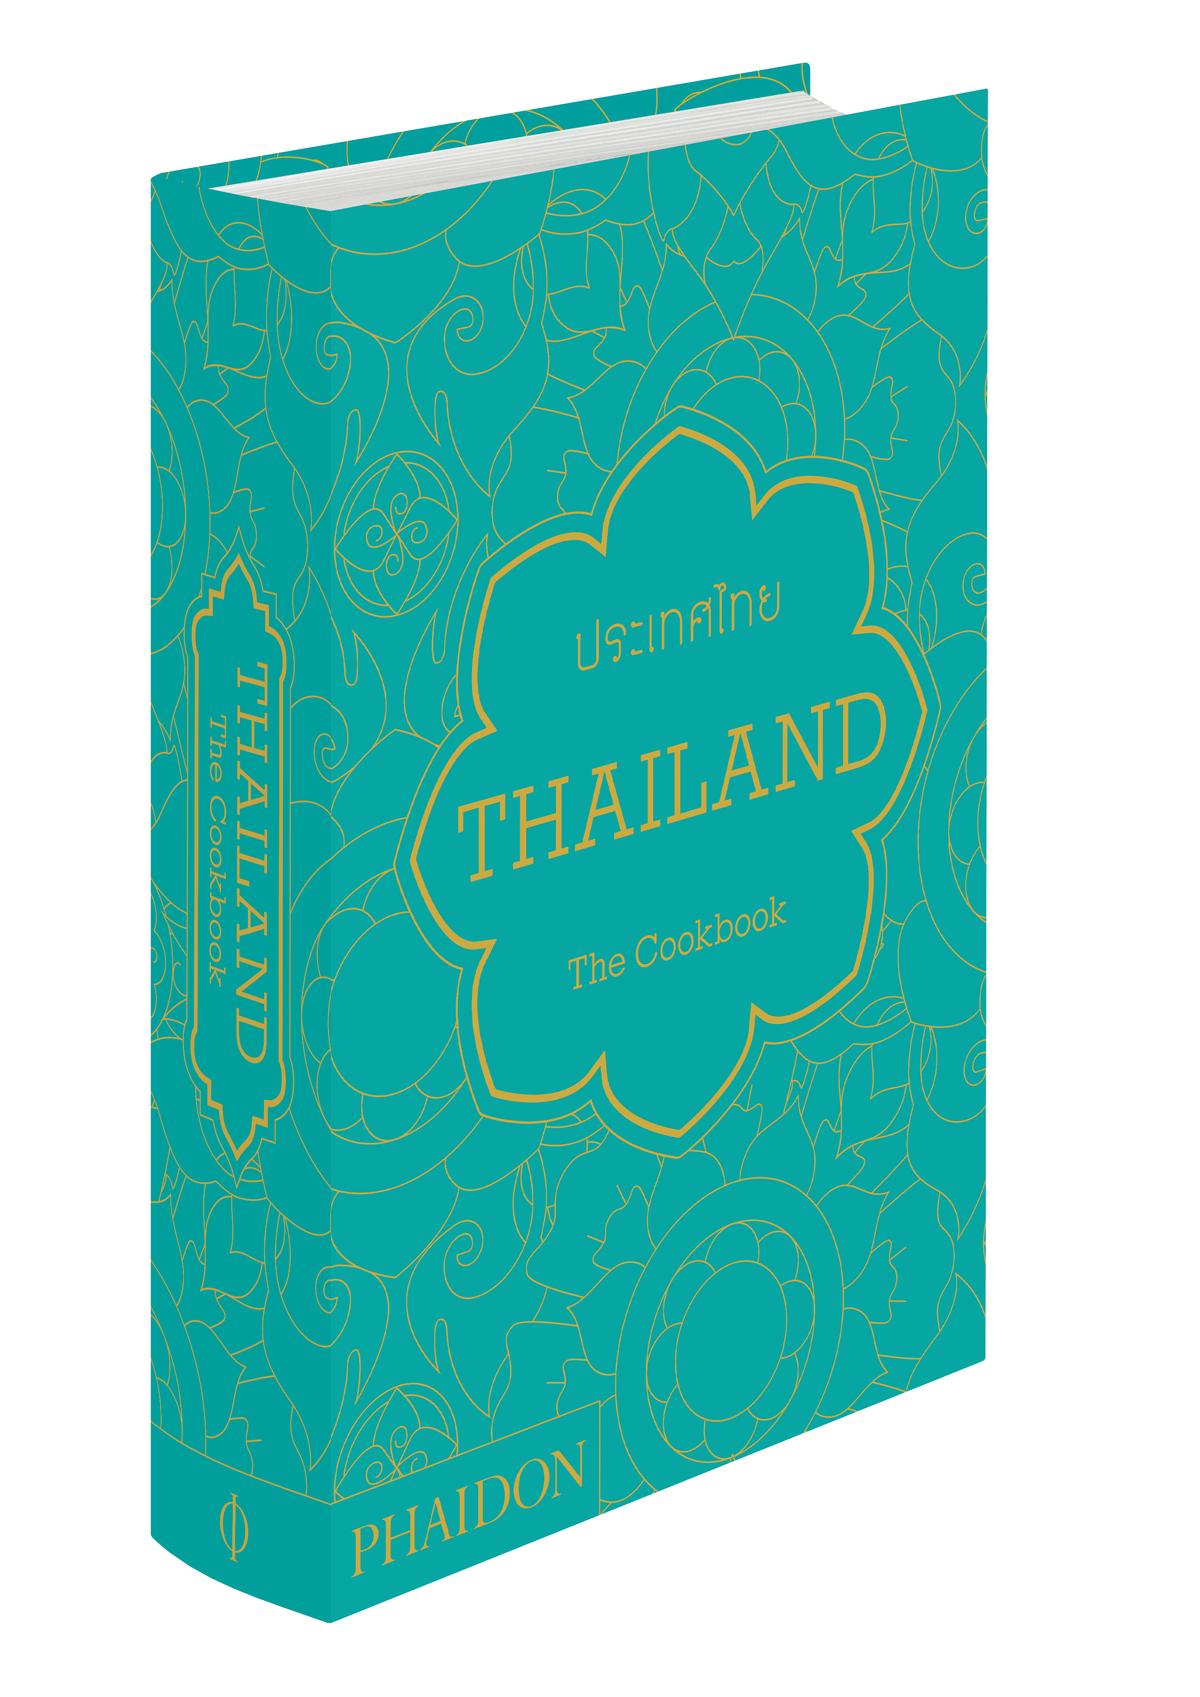 “Thailand: The Cookbook,”Jien- Pierre Gabriel, $49.95, Phadion 2014, phaidon.